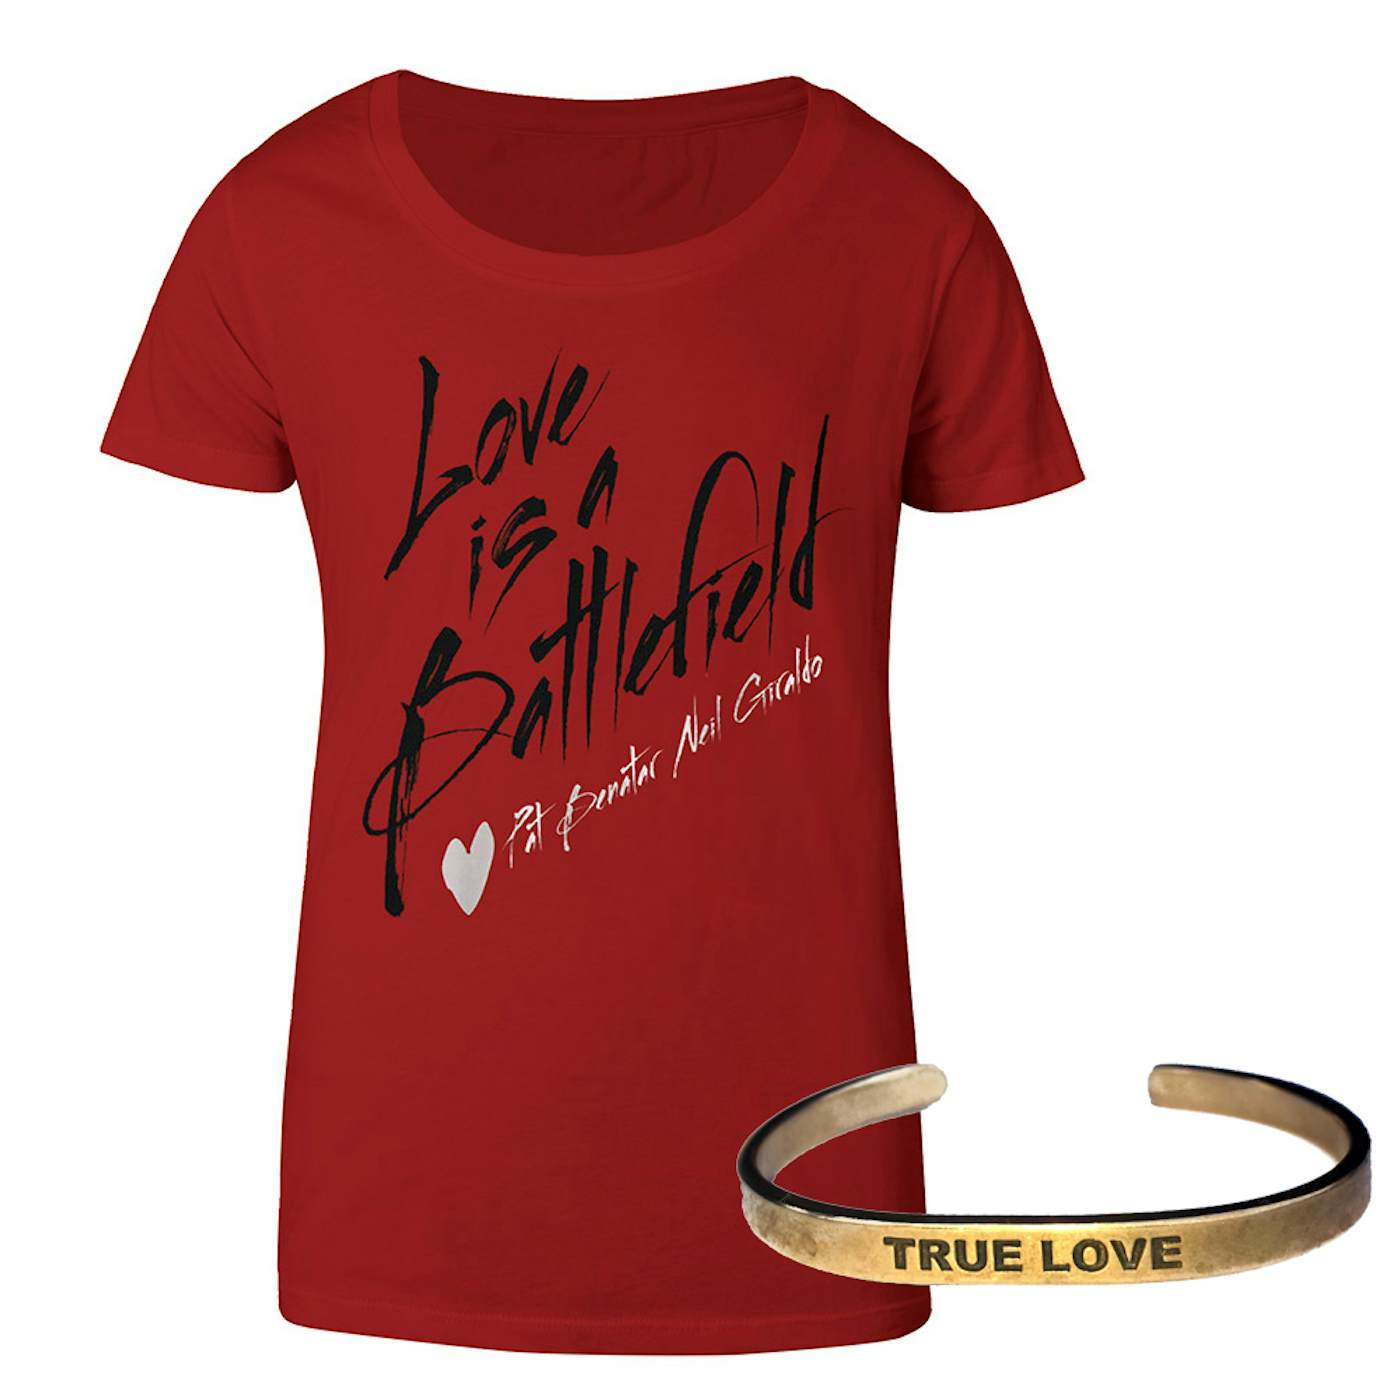 Pat Benatar Ladies Battlefield Tee & True Love braceletWas:59.95